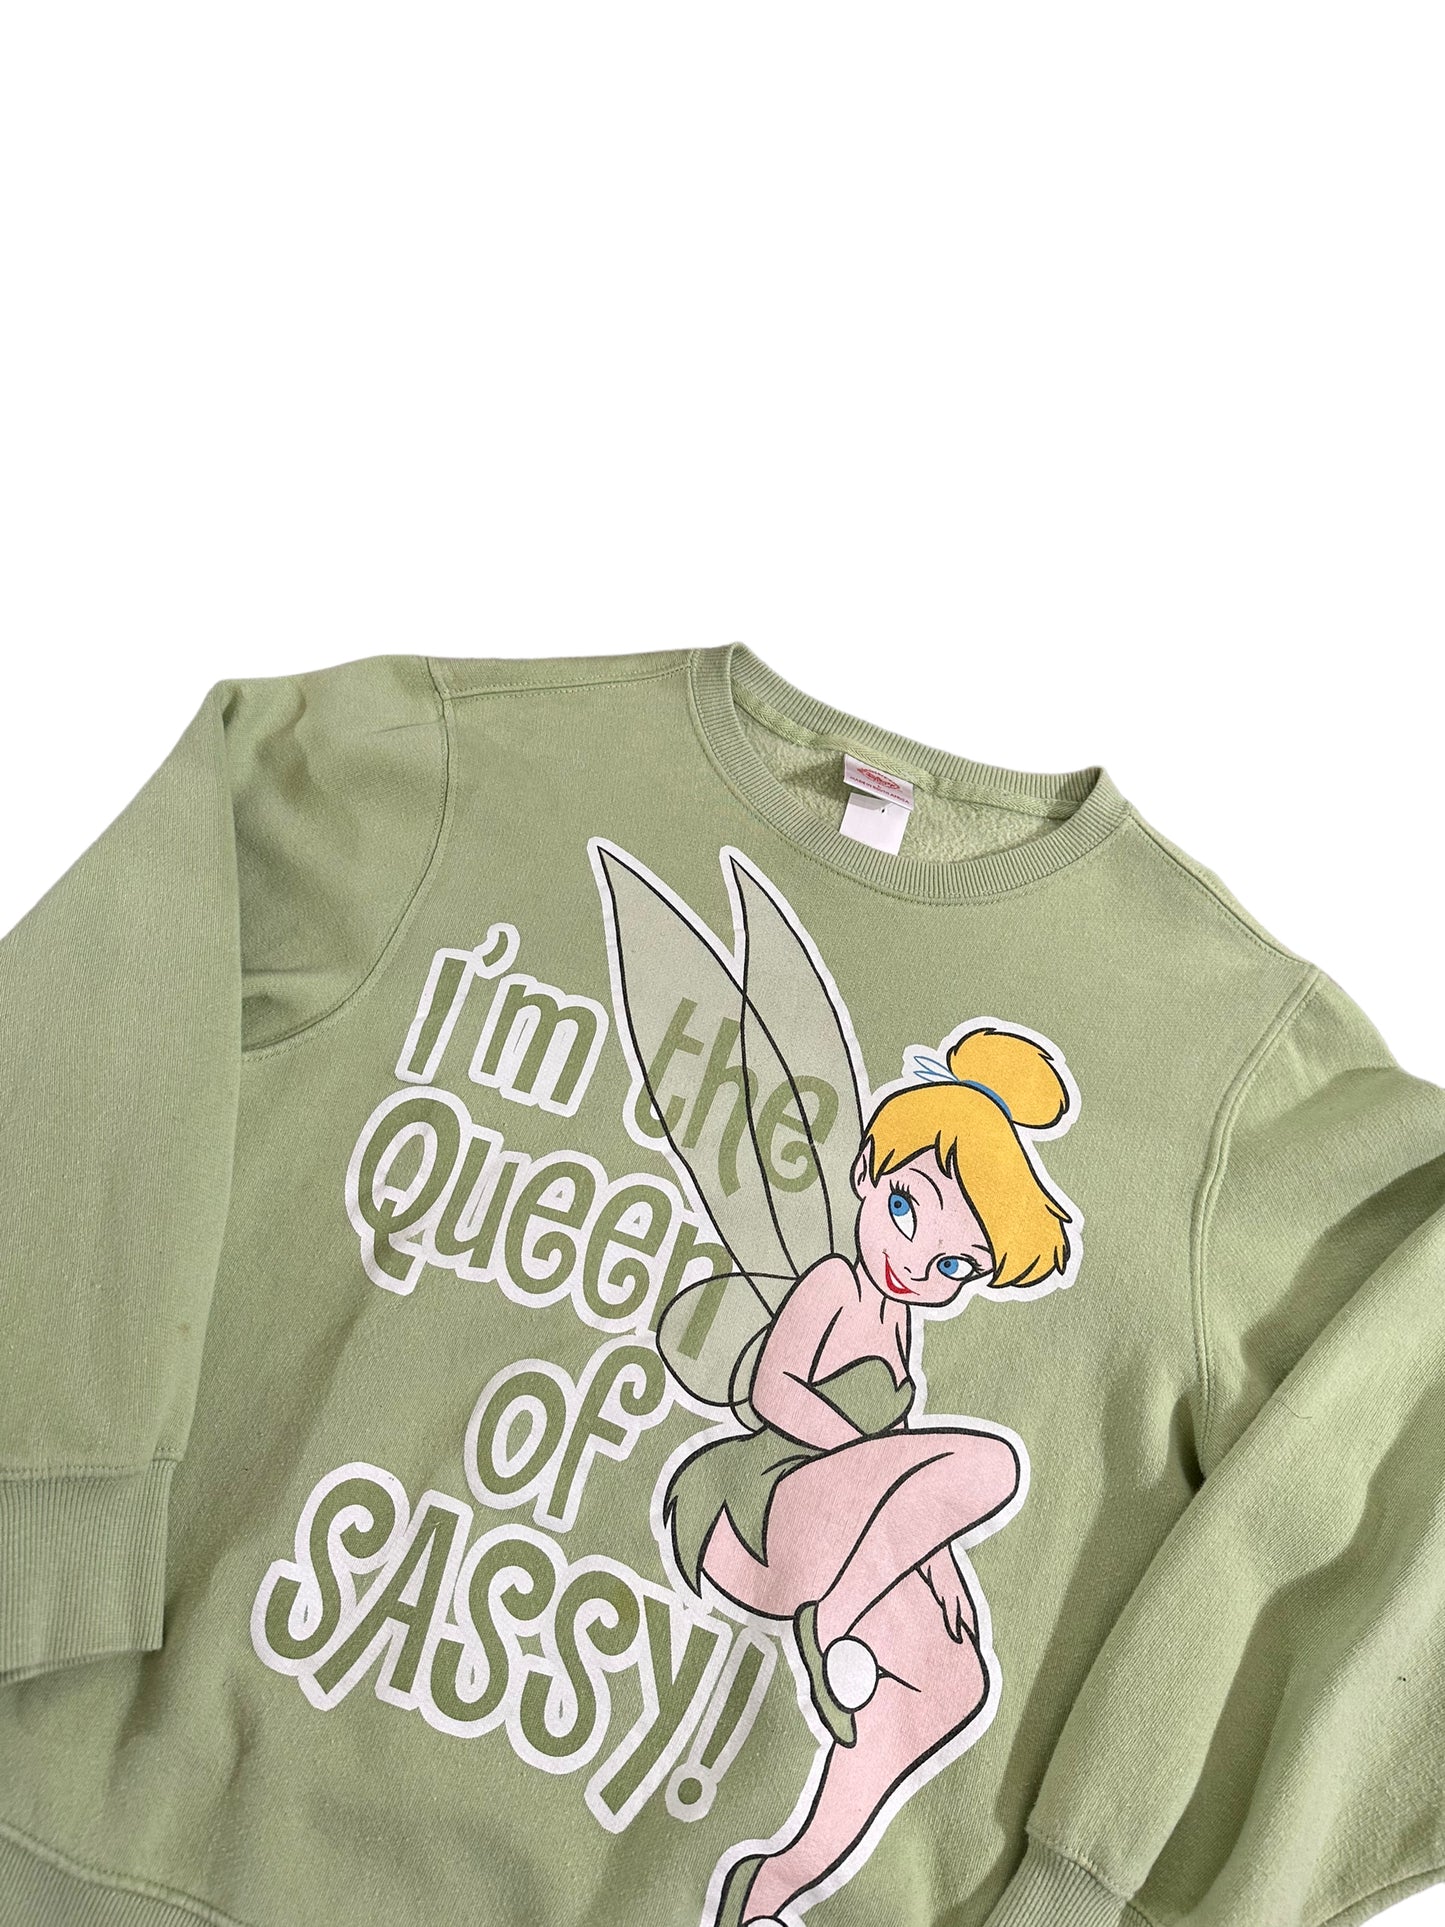 Tinker Bell “I’m the queen of Sassy!” Sweatshirt